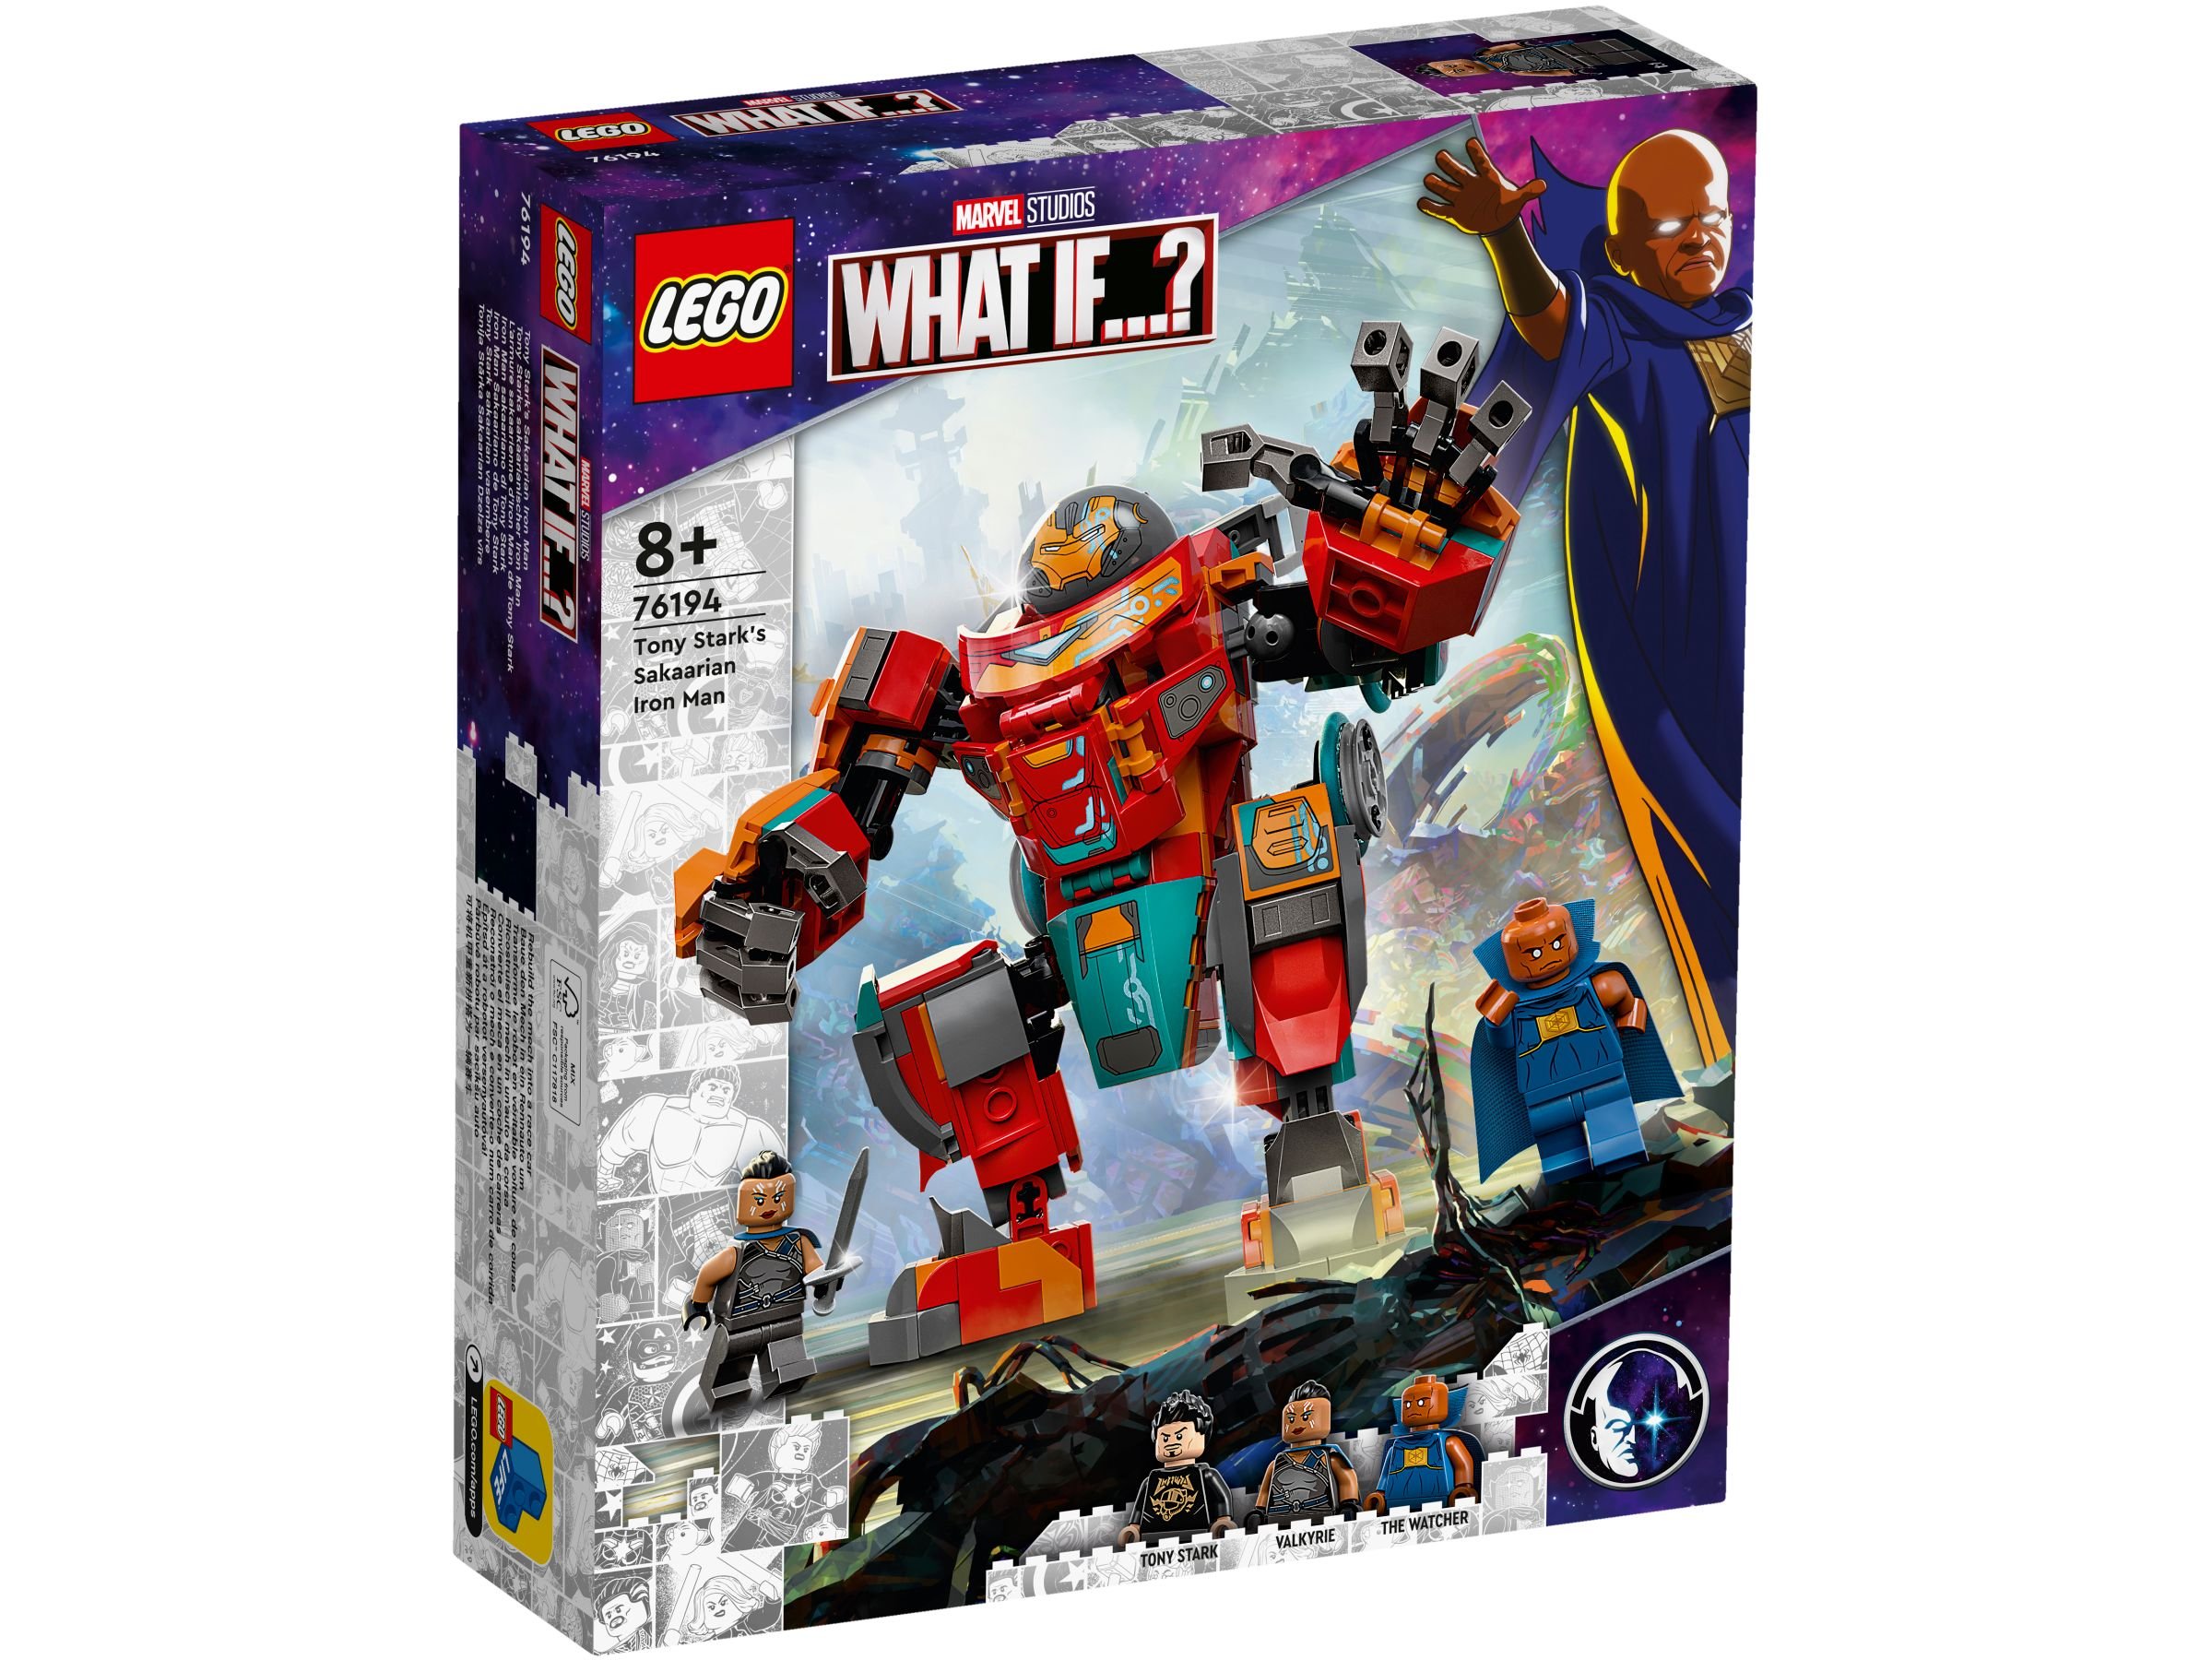 LEGO Super Heroes 76194 Tony Starks sakaarianischer Iron Man LEGO_76194_box1_v29.jpg